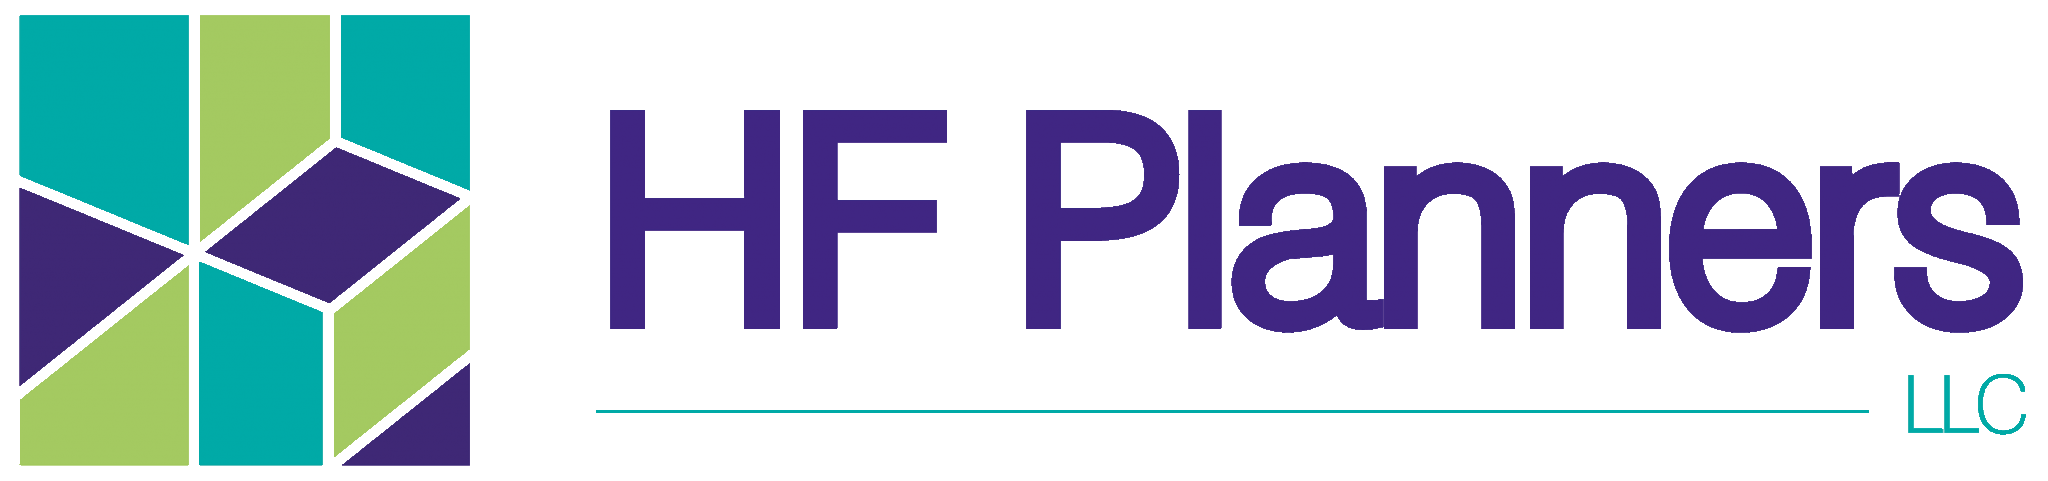 HF Planners, LLC